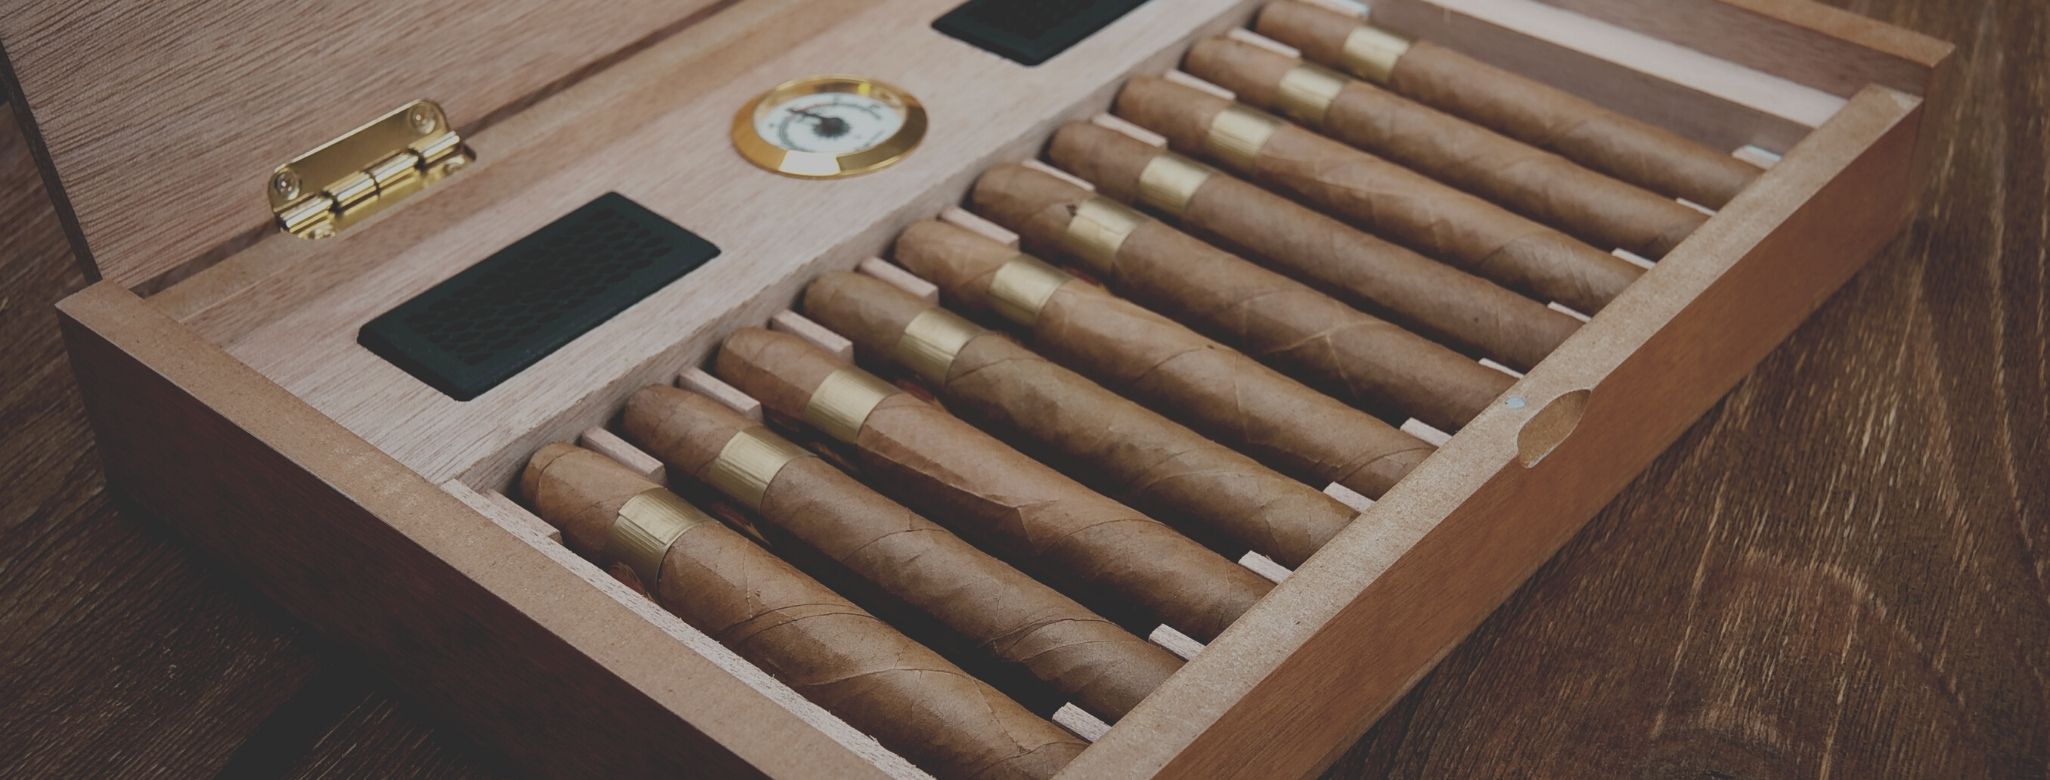 humidor full of cigars